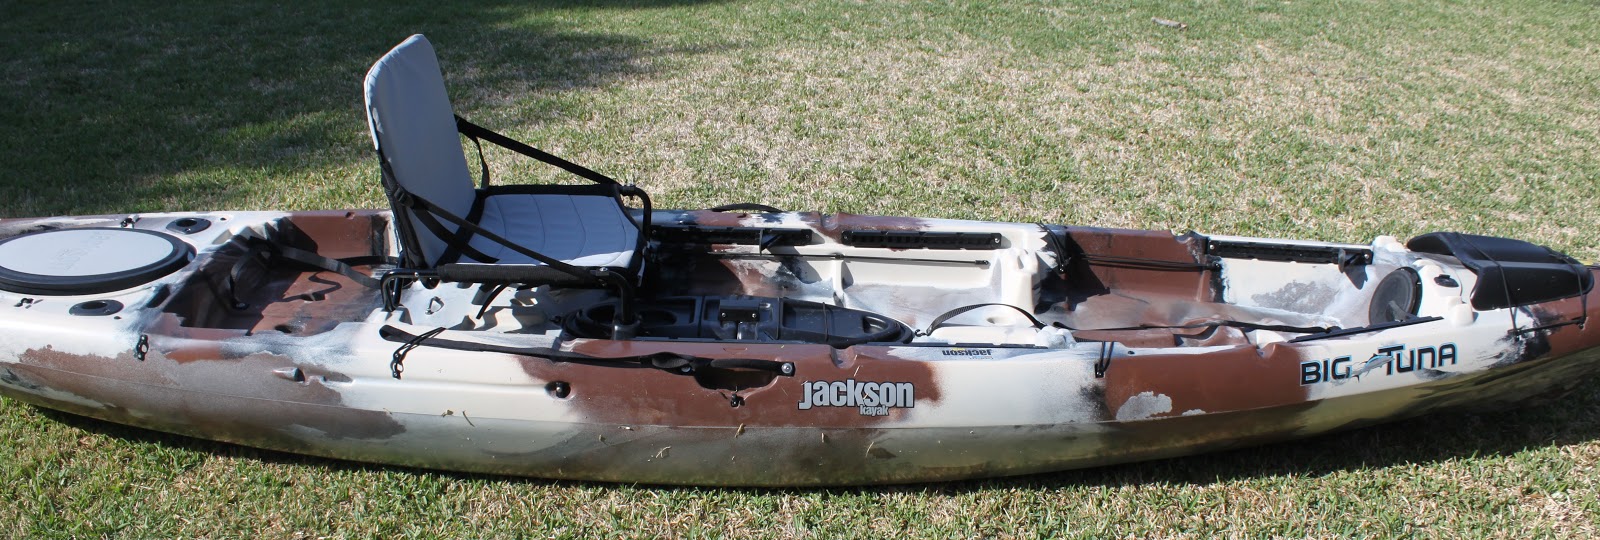 Jackson Kayak Big Tuna Review — Texas Kayak Fisher